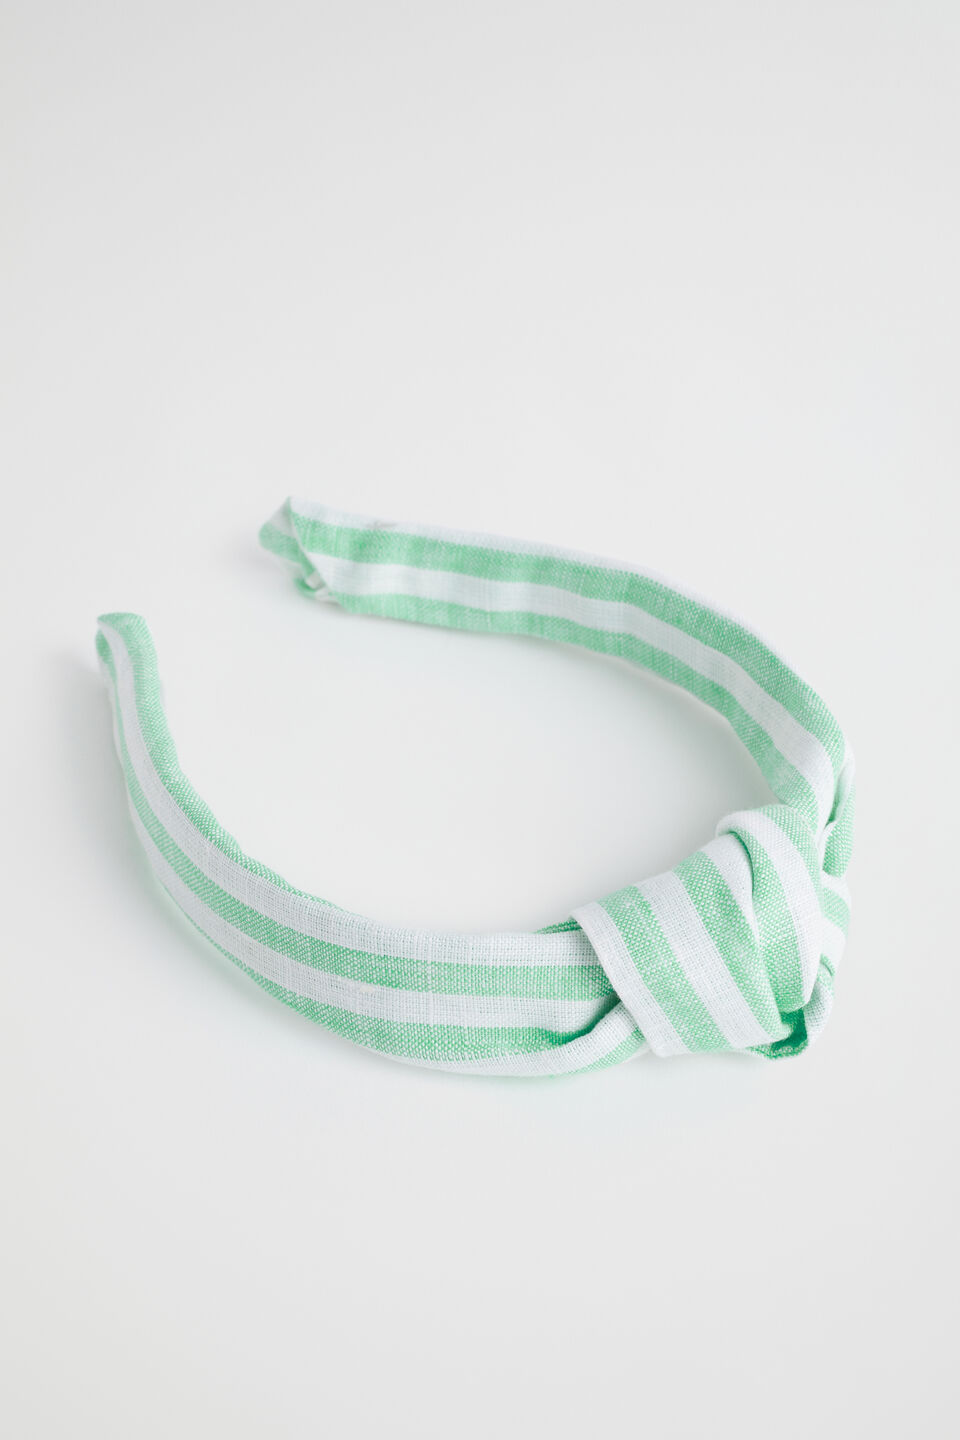 Stripe Knot Headband  Key Lime Stripe